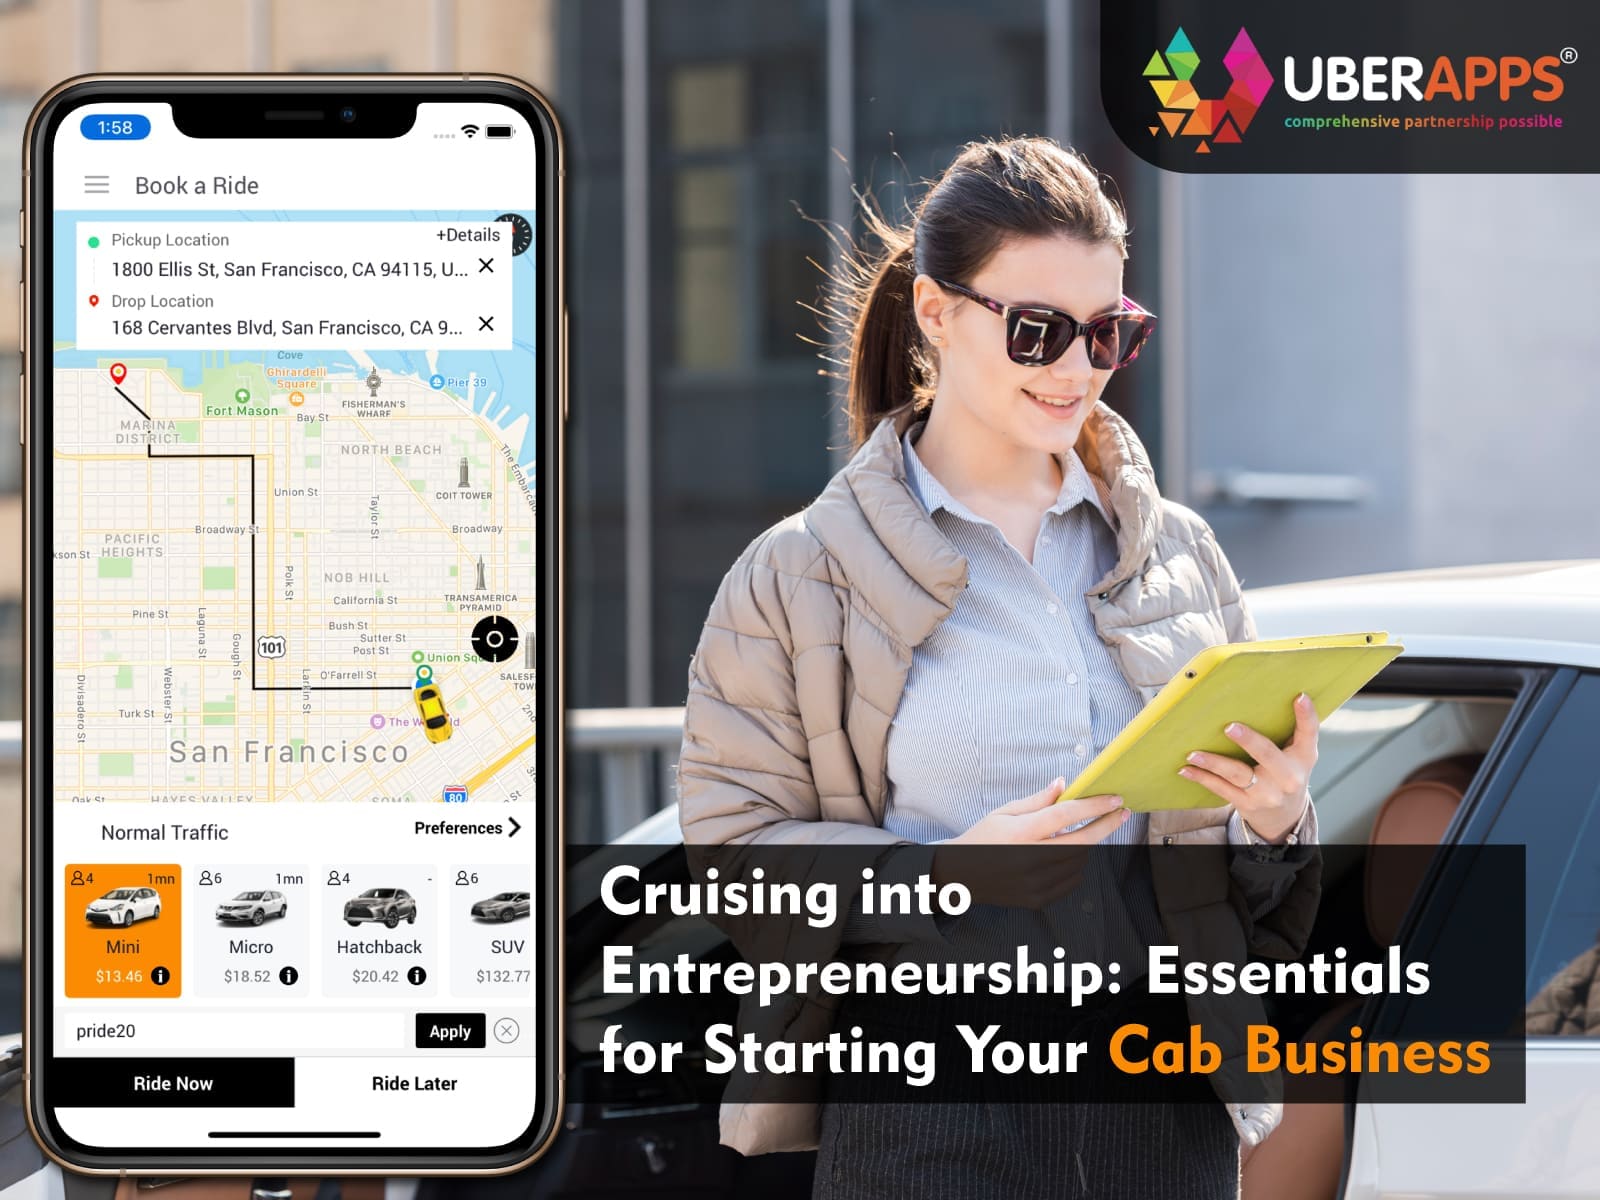 Cruising into Entrepreneurship: Essentials for Starting Your Cab Business